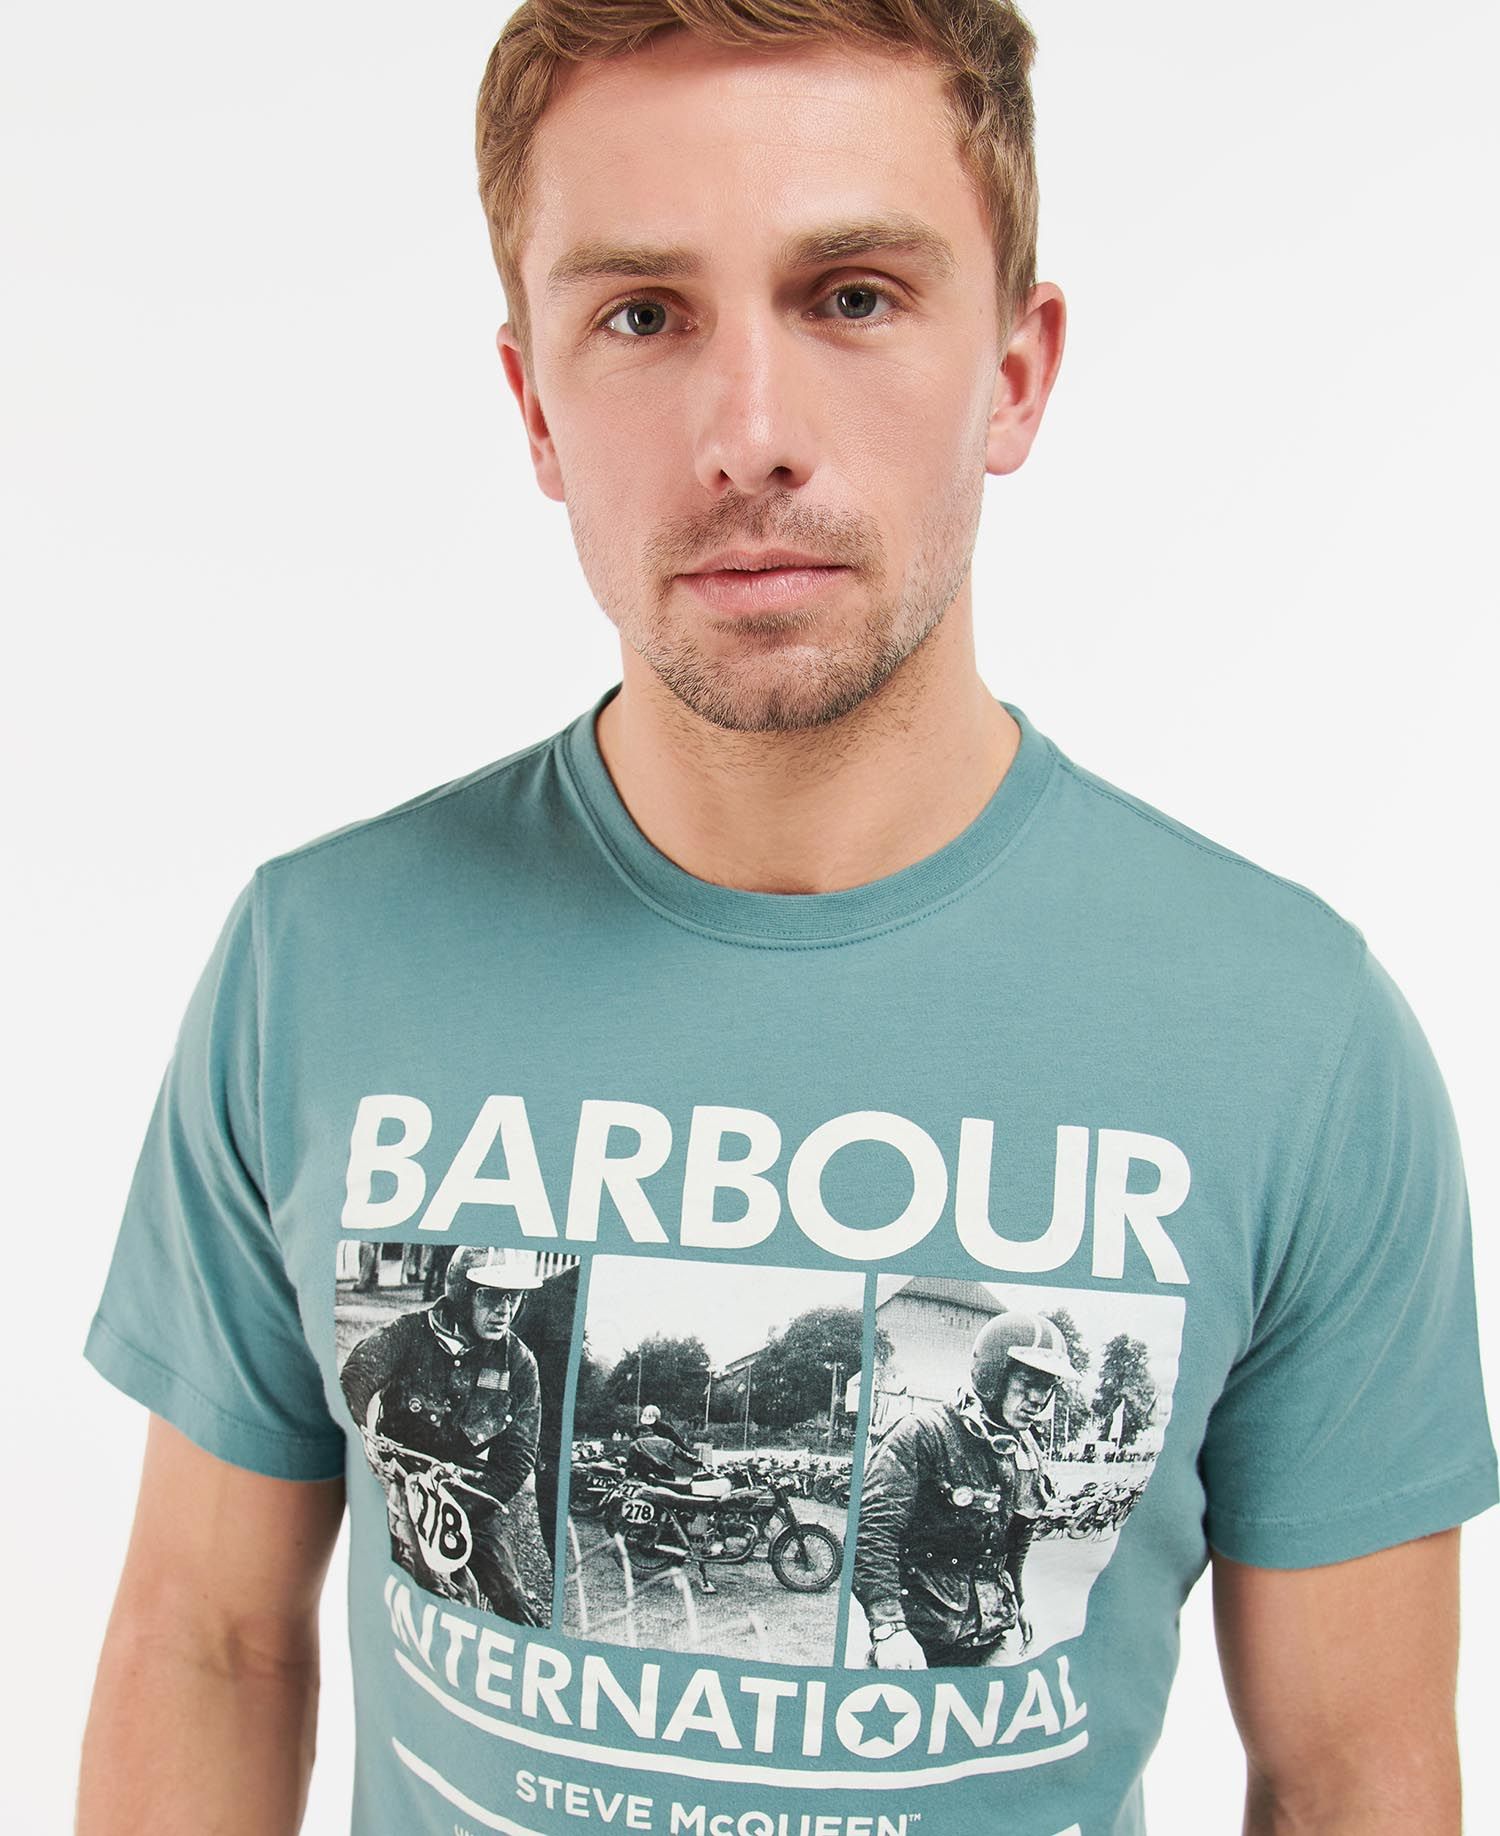 Barbour International SMQ Milton Tee - North Atlantic